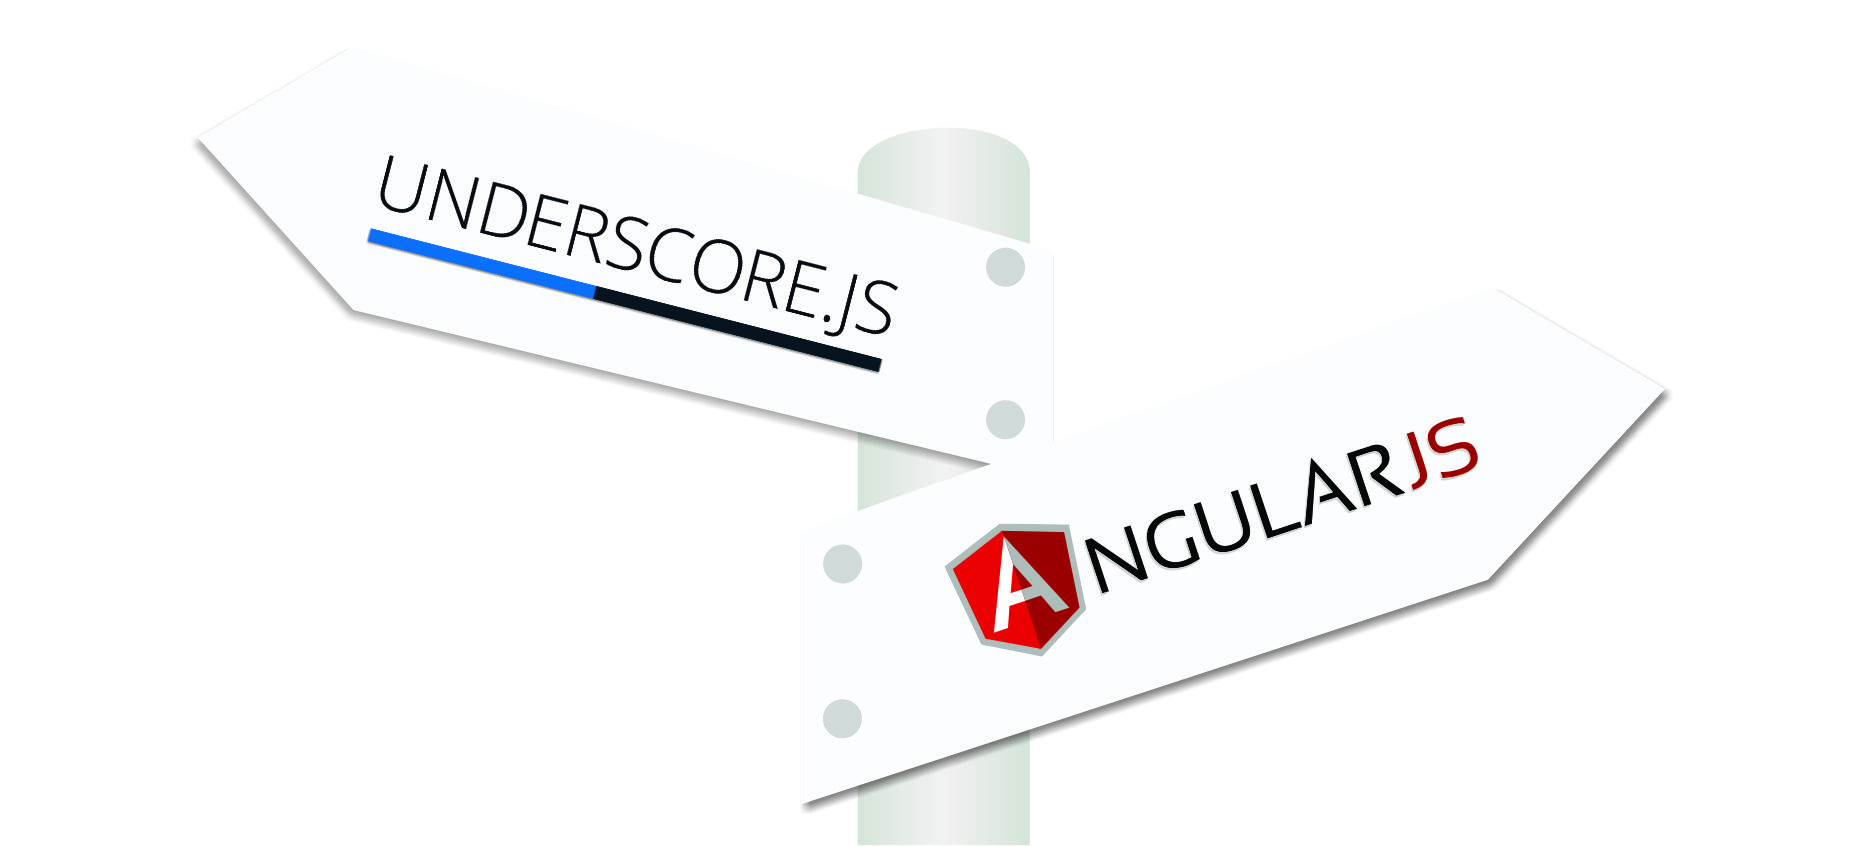 UnderscoreJs with AngularJs